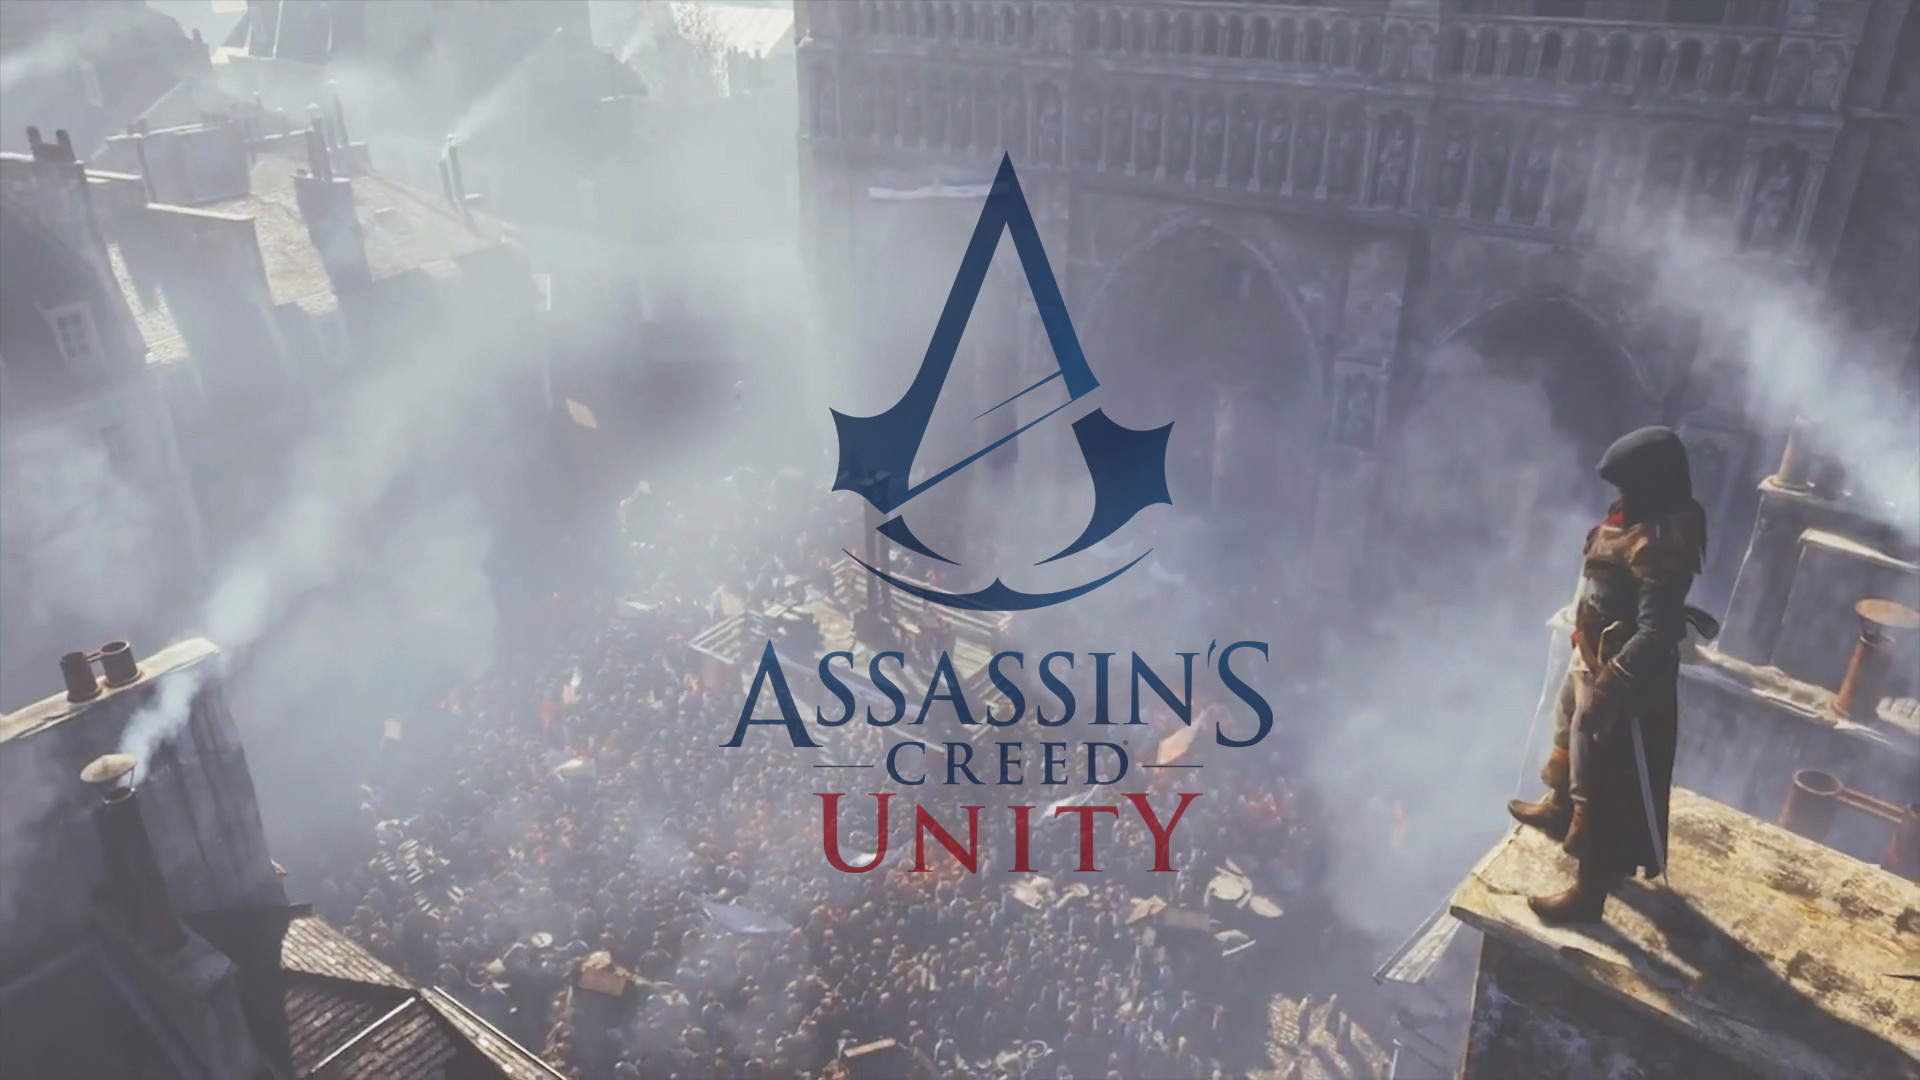 Assassins creed unity когда будет в steam фото 66